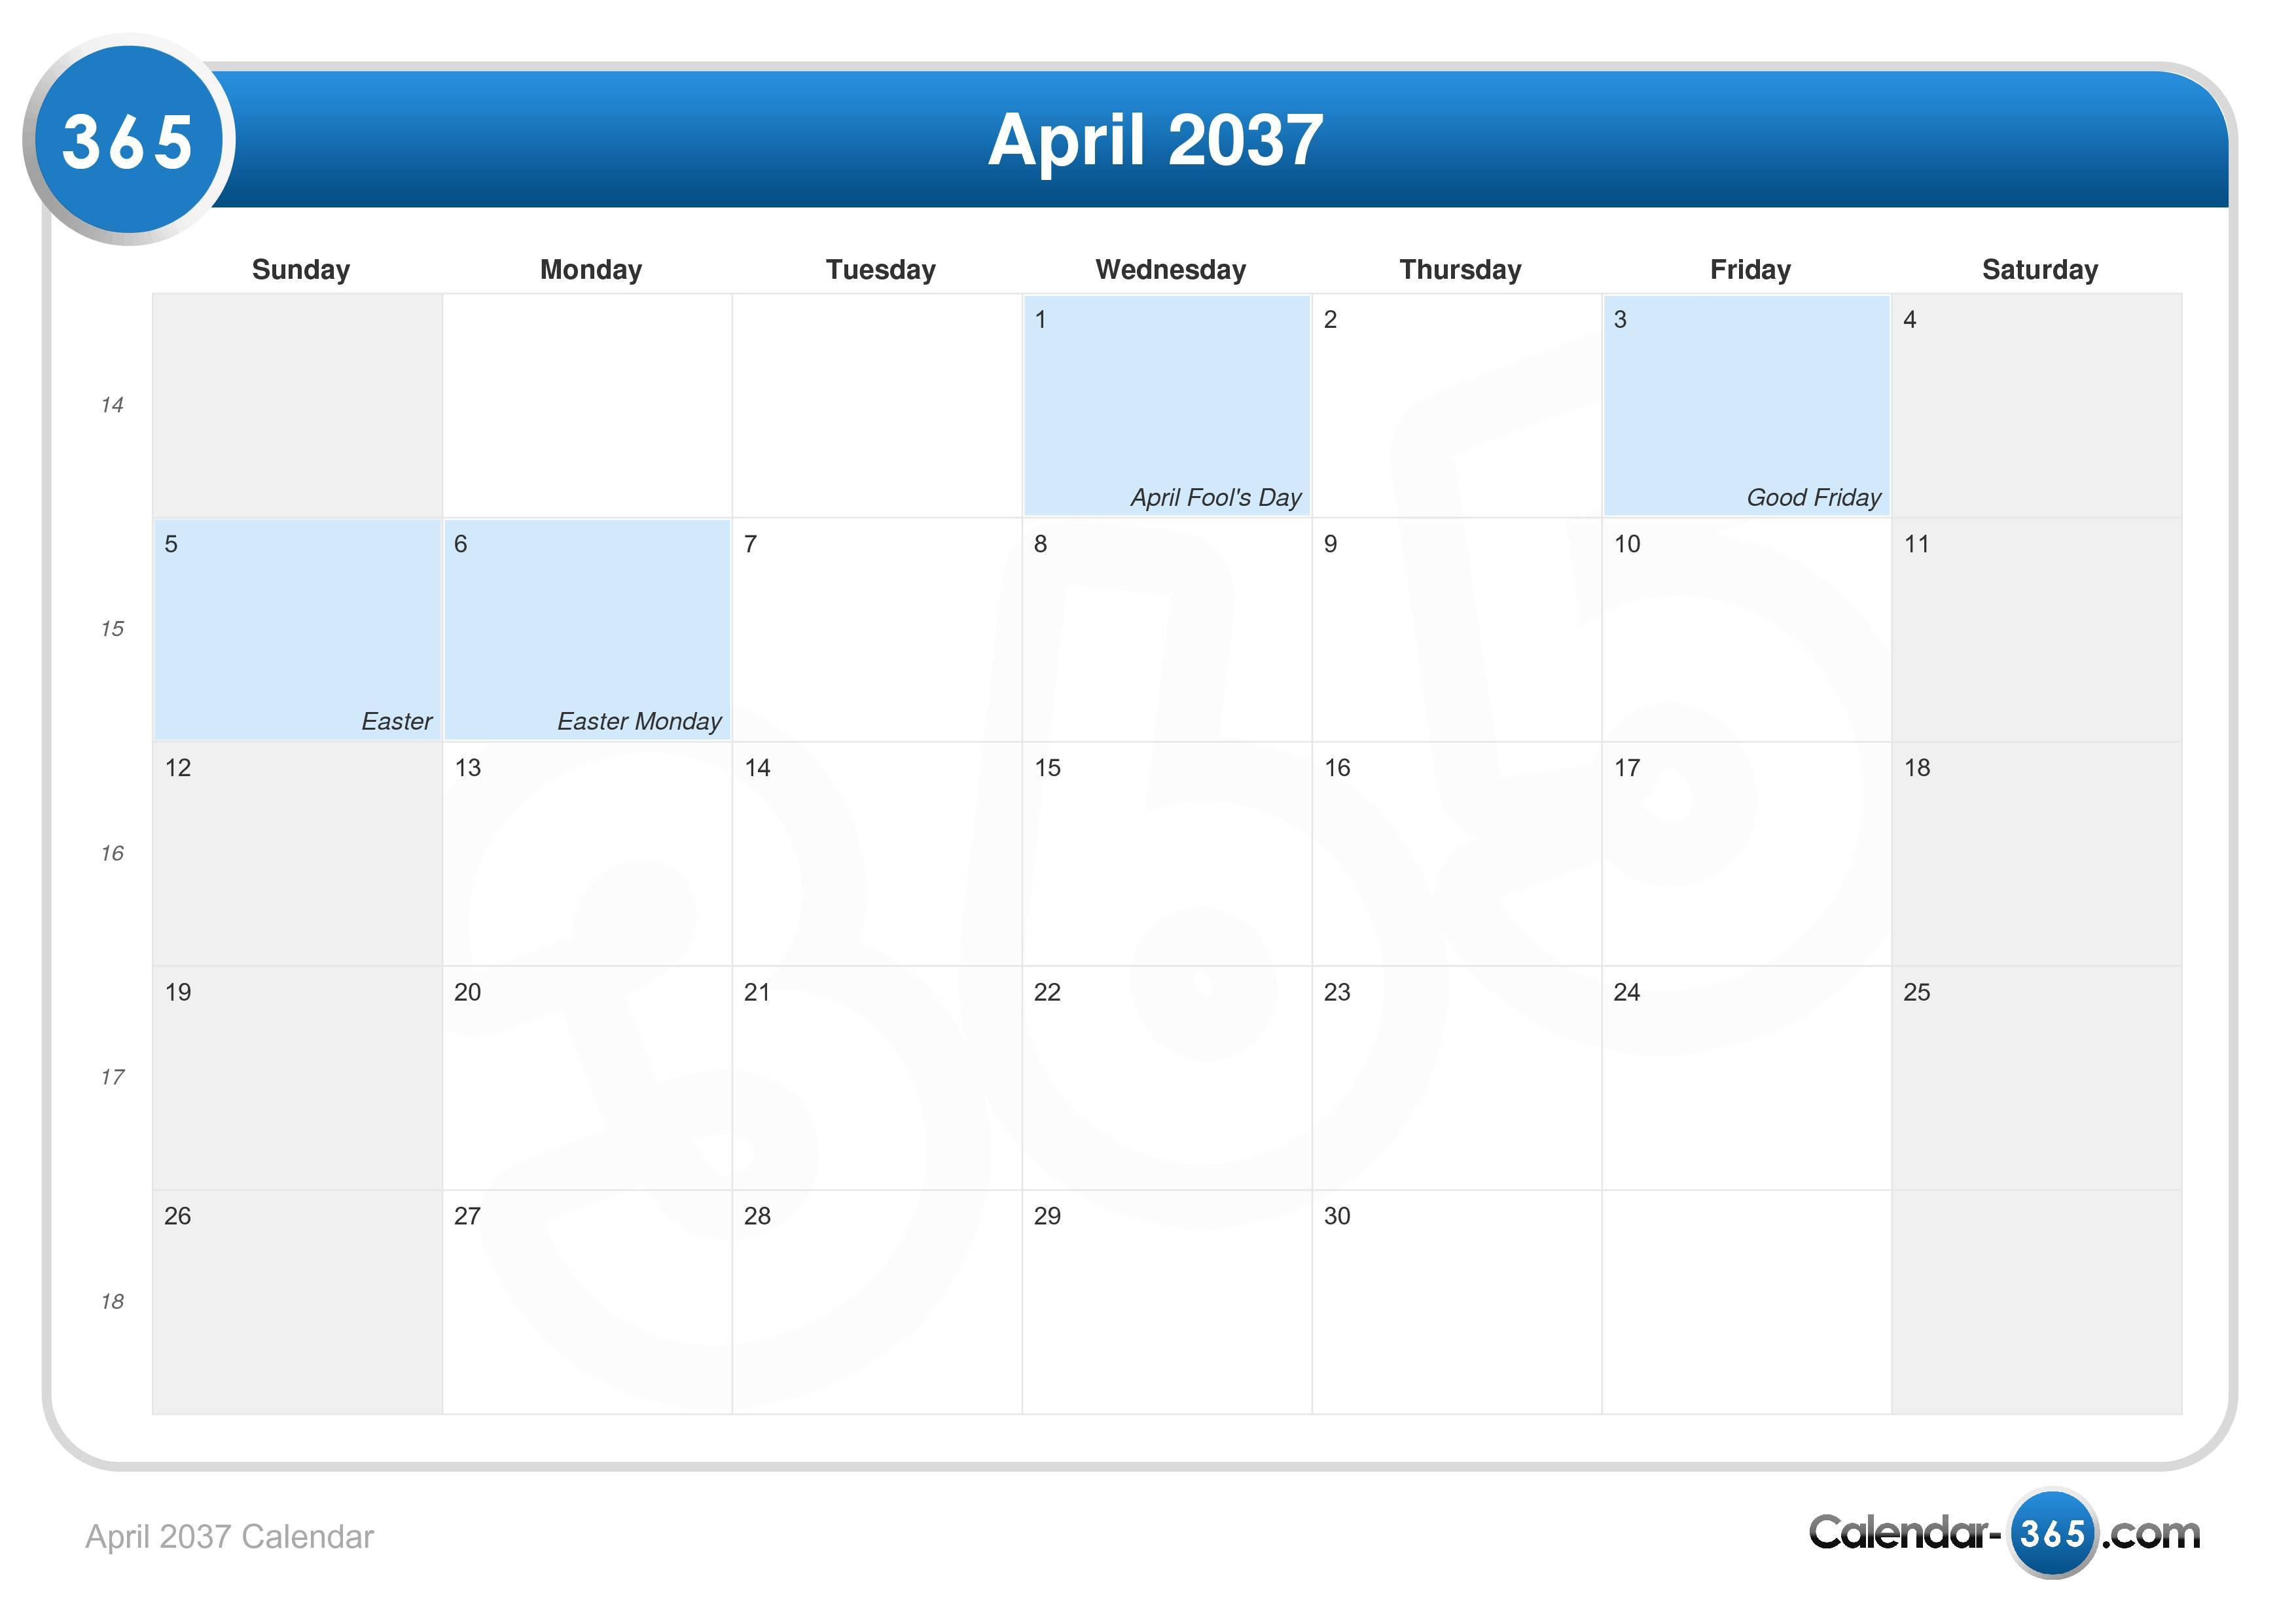 April 2037 Calendar